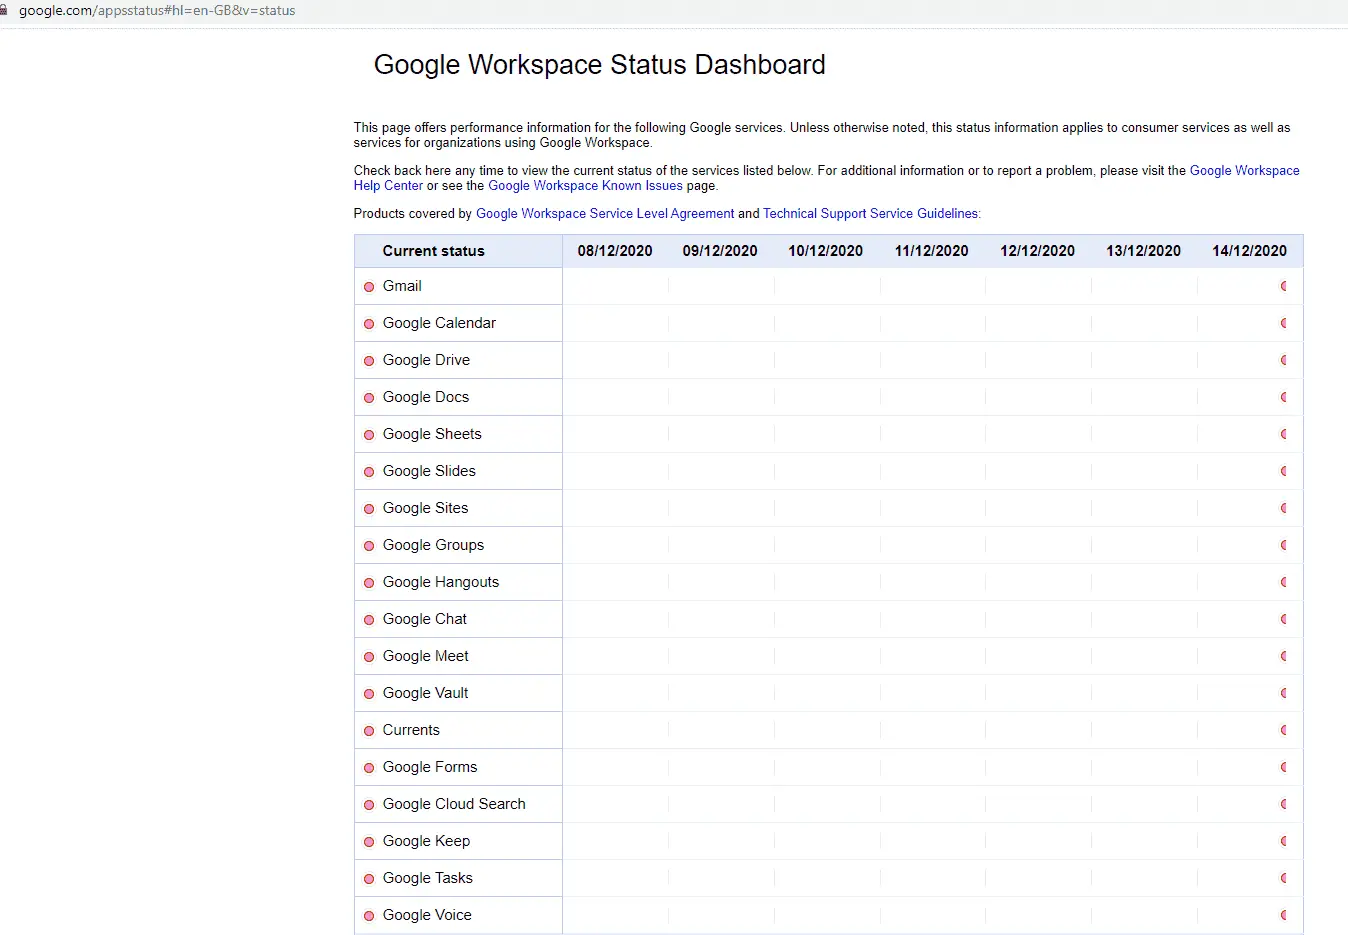 Google Workspace Status Dashboard